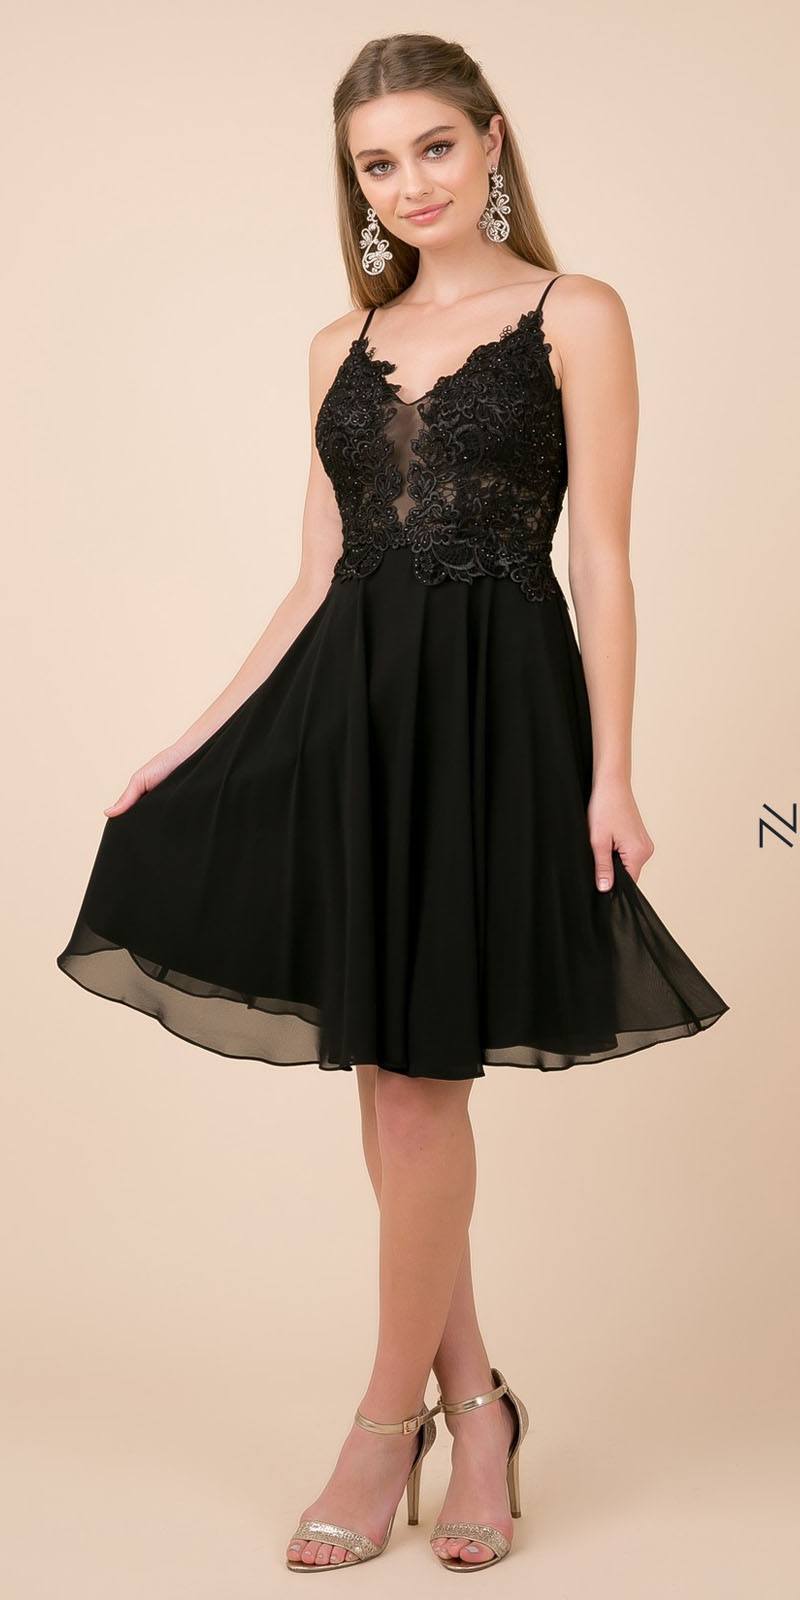 Nox Anabel A660 Knee Length Black Homecoming Dress Flowy Chiffon